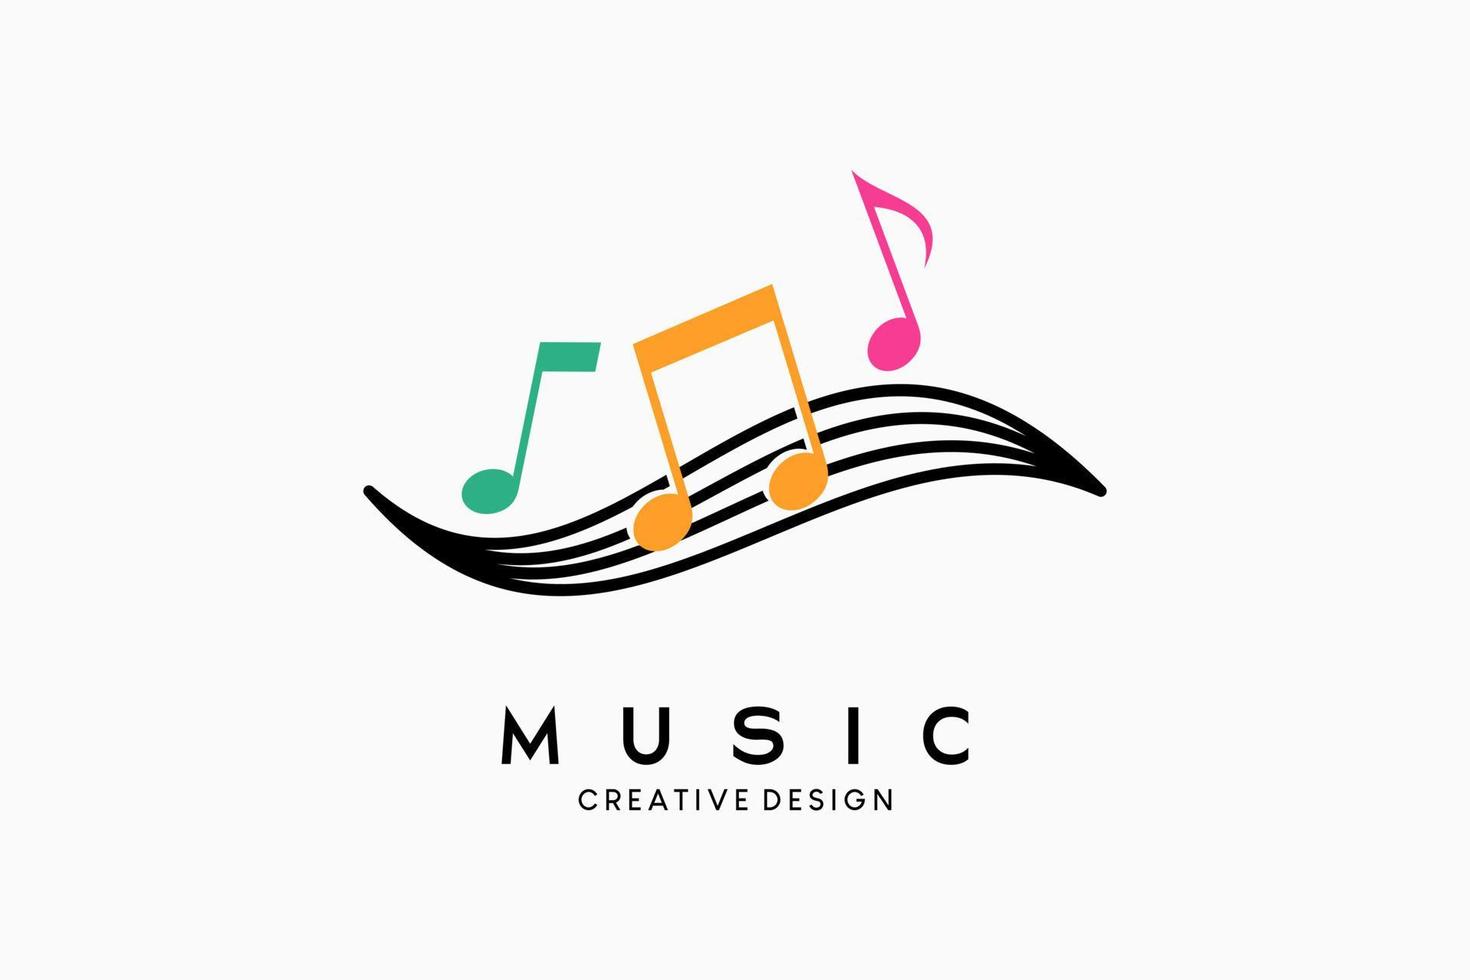 Music icon logo design or music symbol creative concept, vector illustration